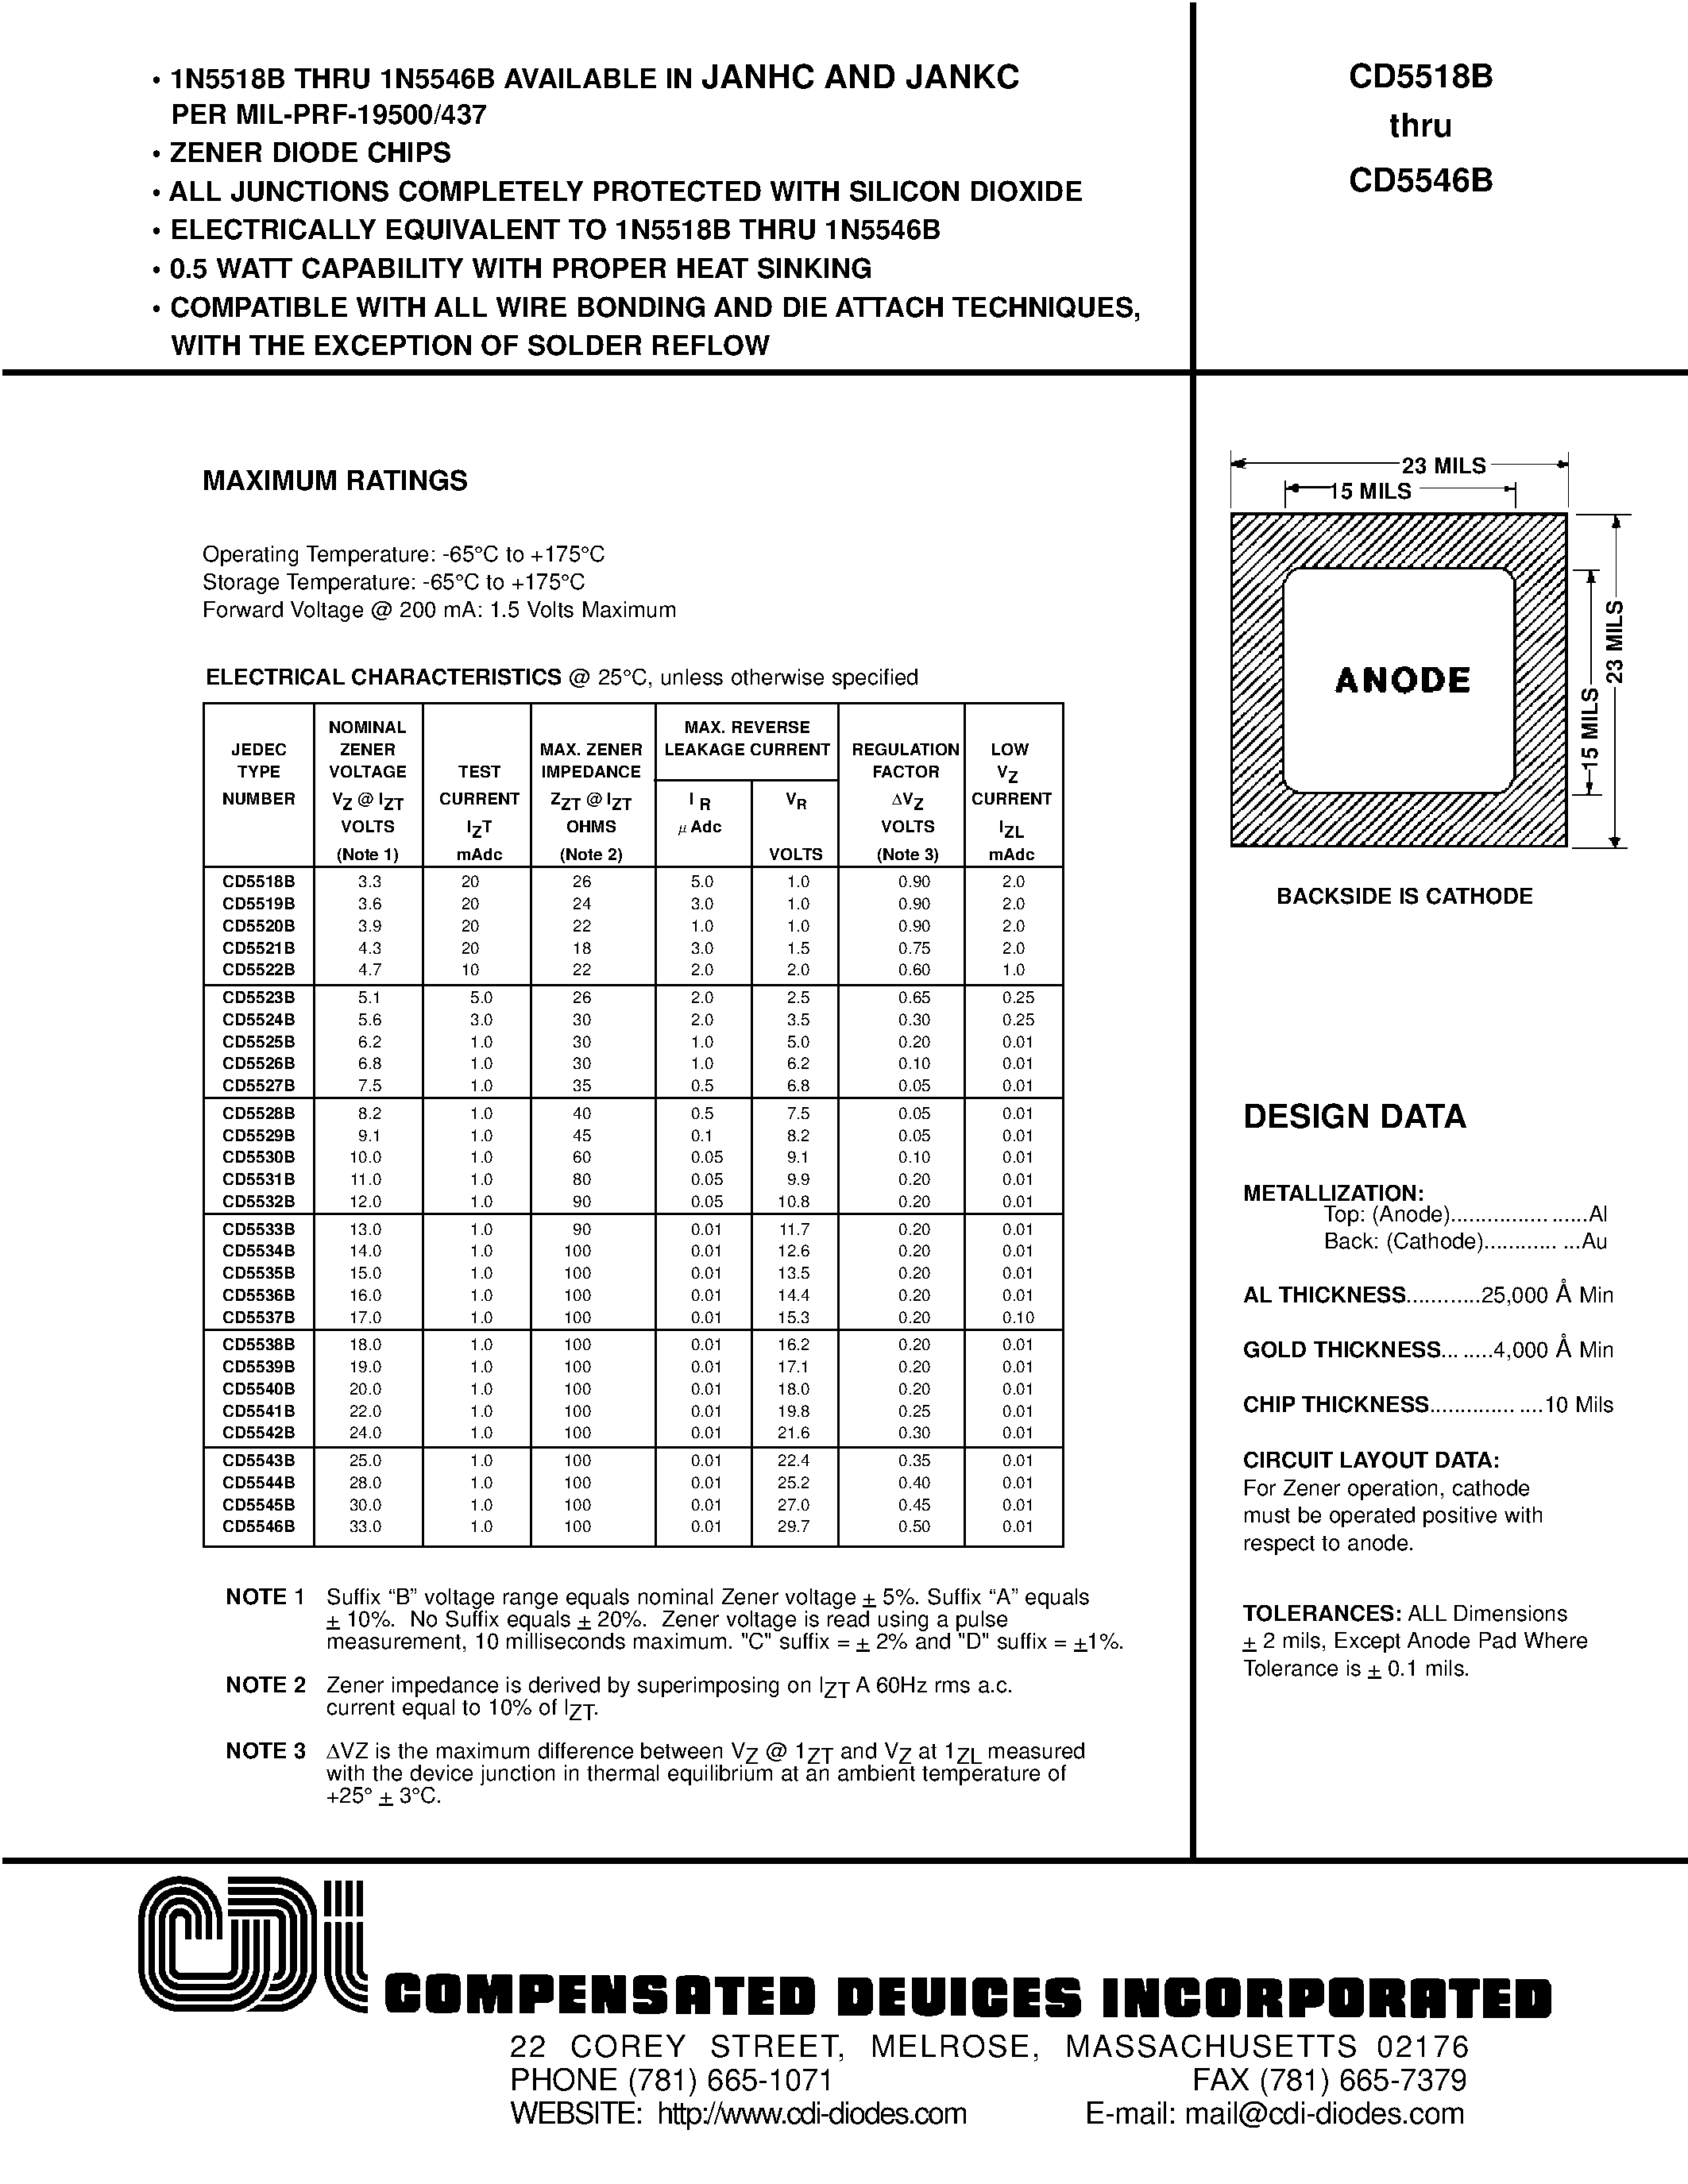 Datasheet CD5531B - ZENER DIODE CHIPS page 1